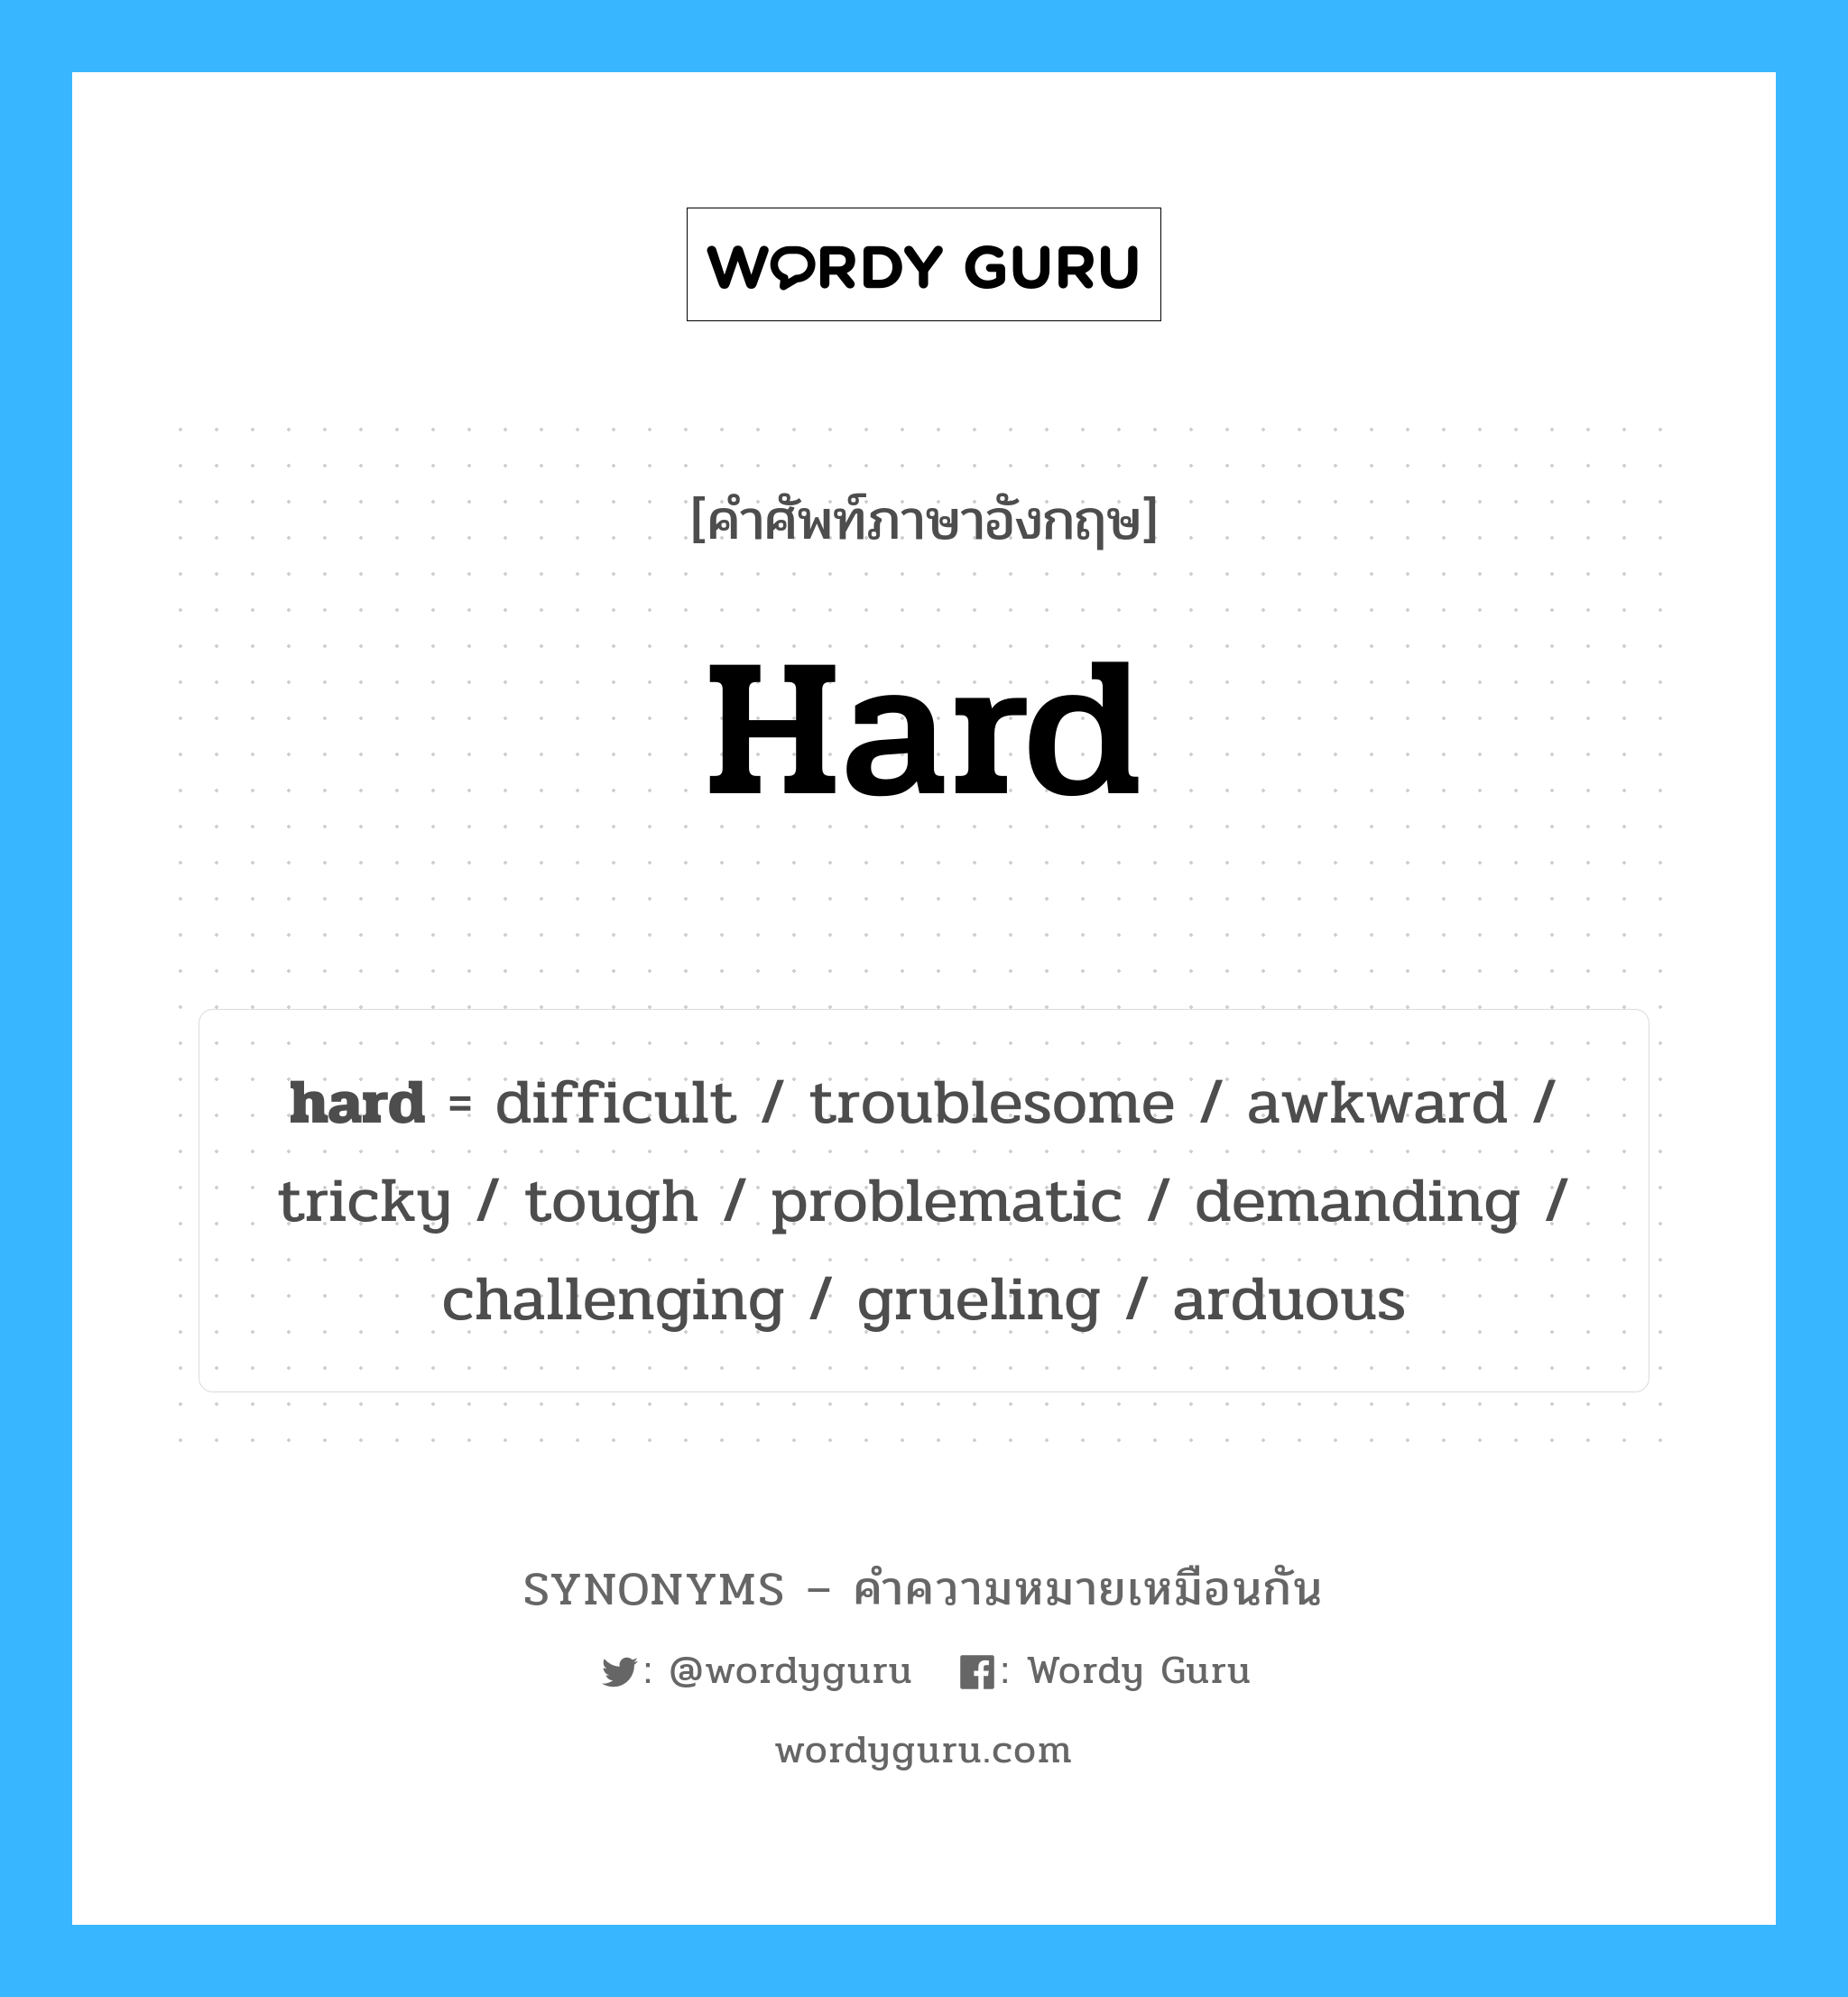 arduous เป็นหนึ่งใน hard และมีคำอื่น ๆ อีกดังนี้, คำศัพท์ภาษาอังกฤษ arduous ความหมายคล้ายกันกับ hard แปลว่า ยากลำบาก หมวด hard